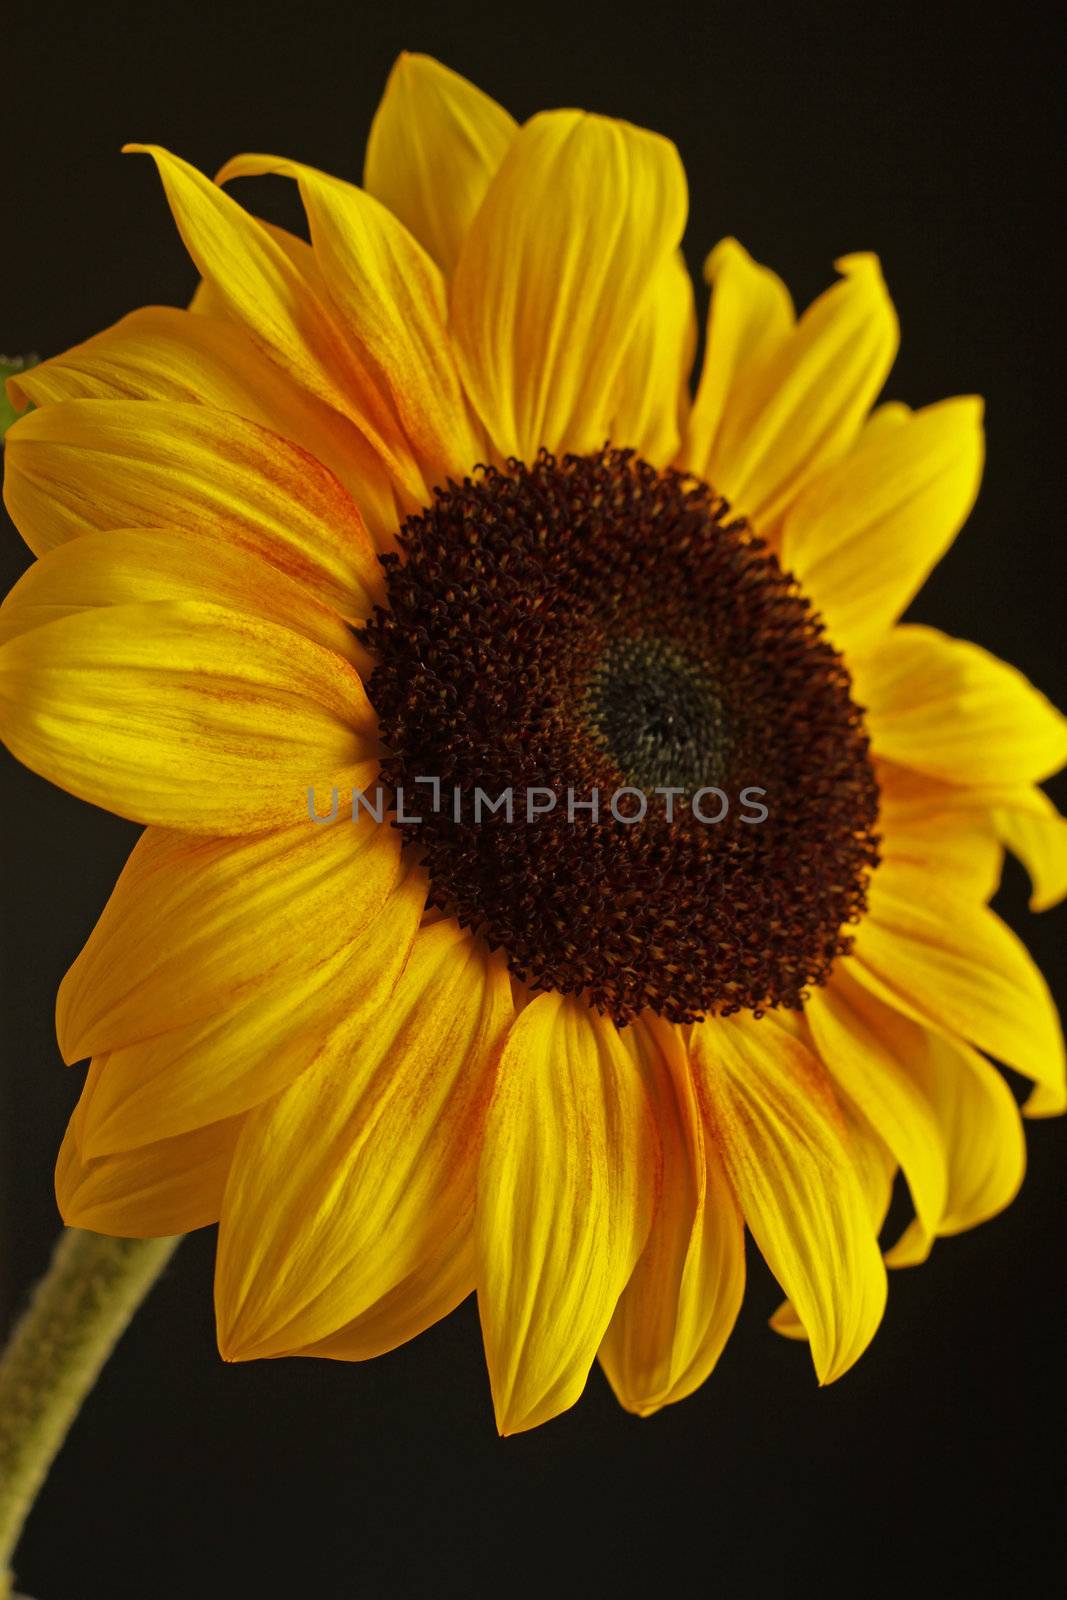 Sunflower by danapaul14